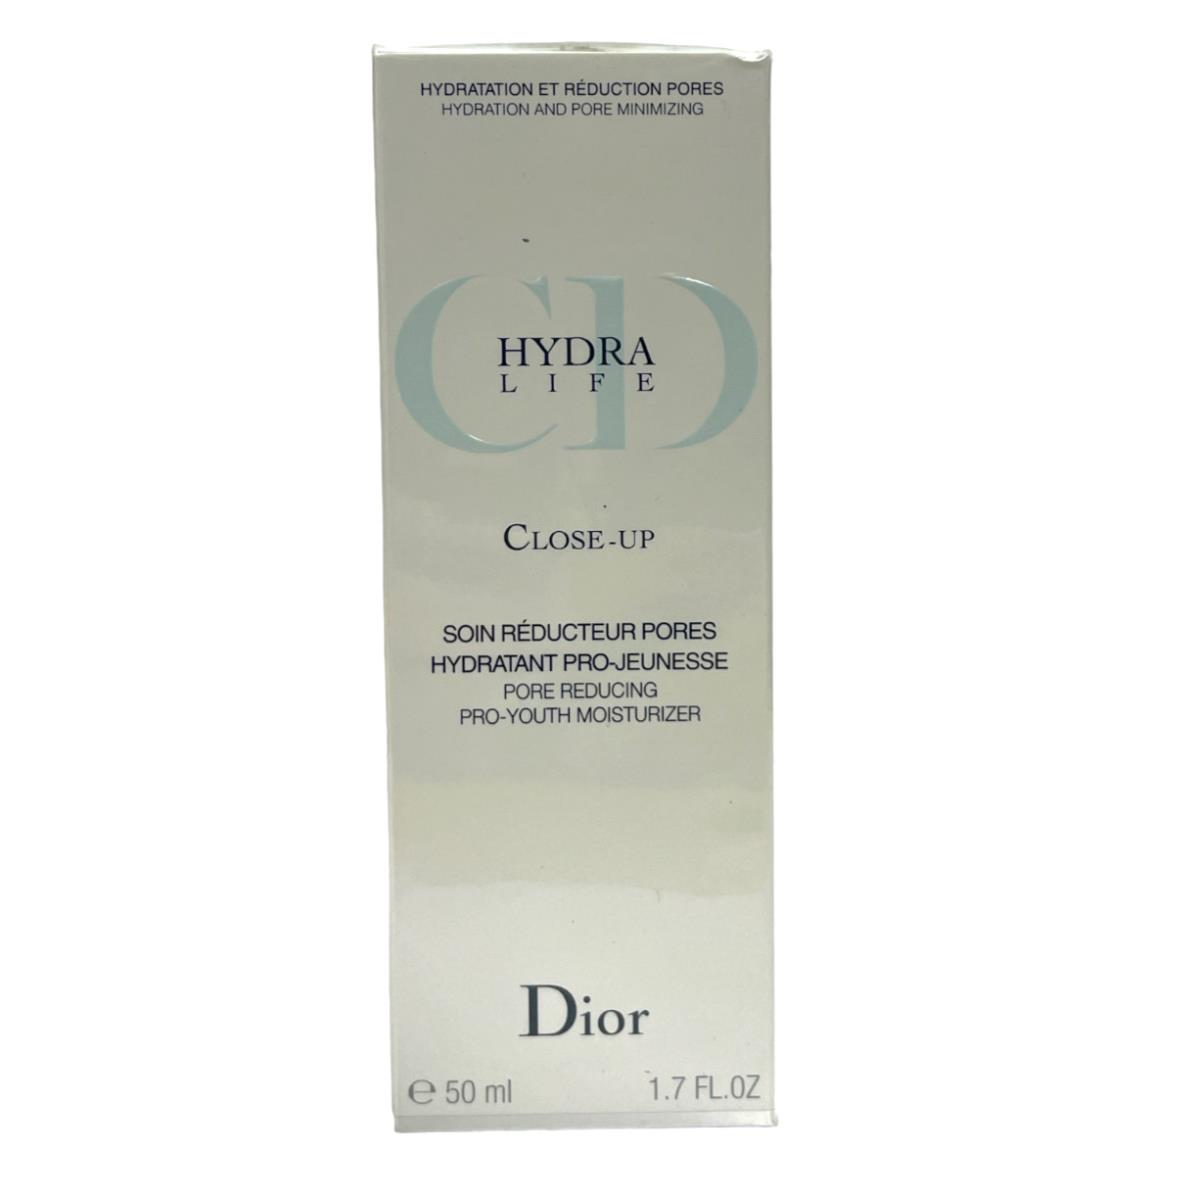 Dior Hydra Life Close-up Pore Reducing Pro-youth Moisturizer 1.7oz-50ml